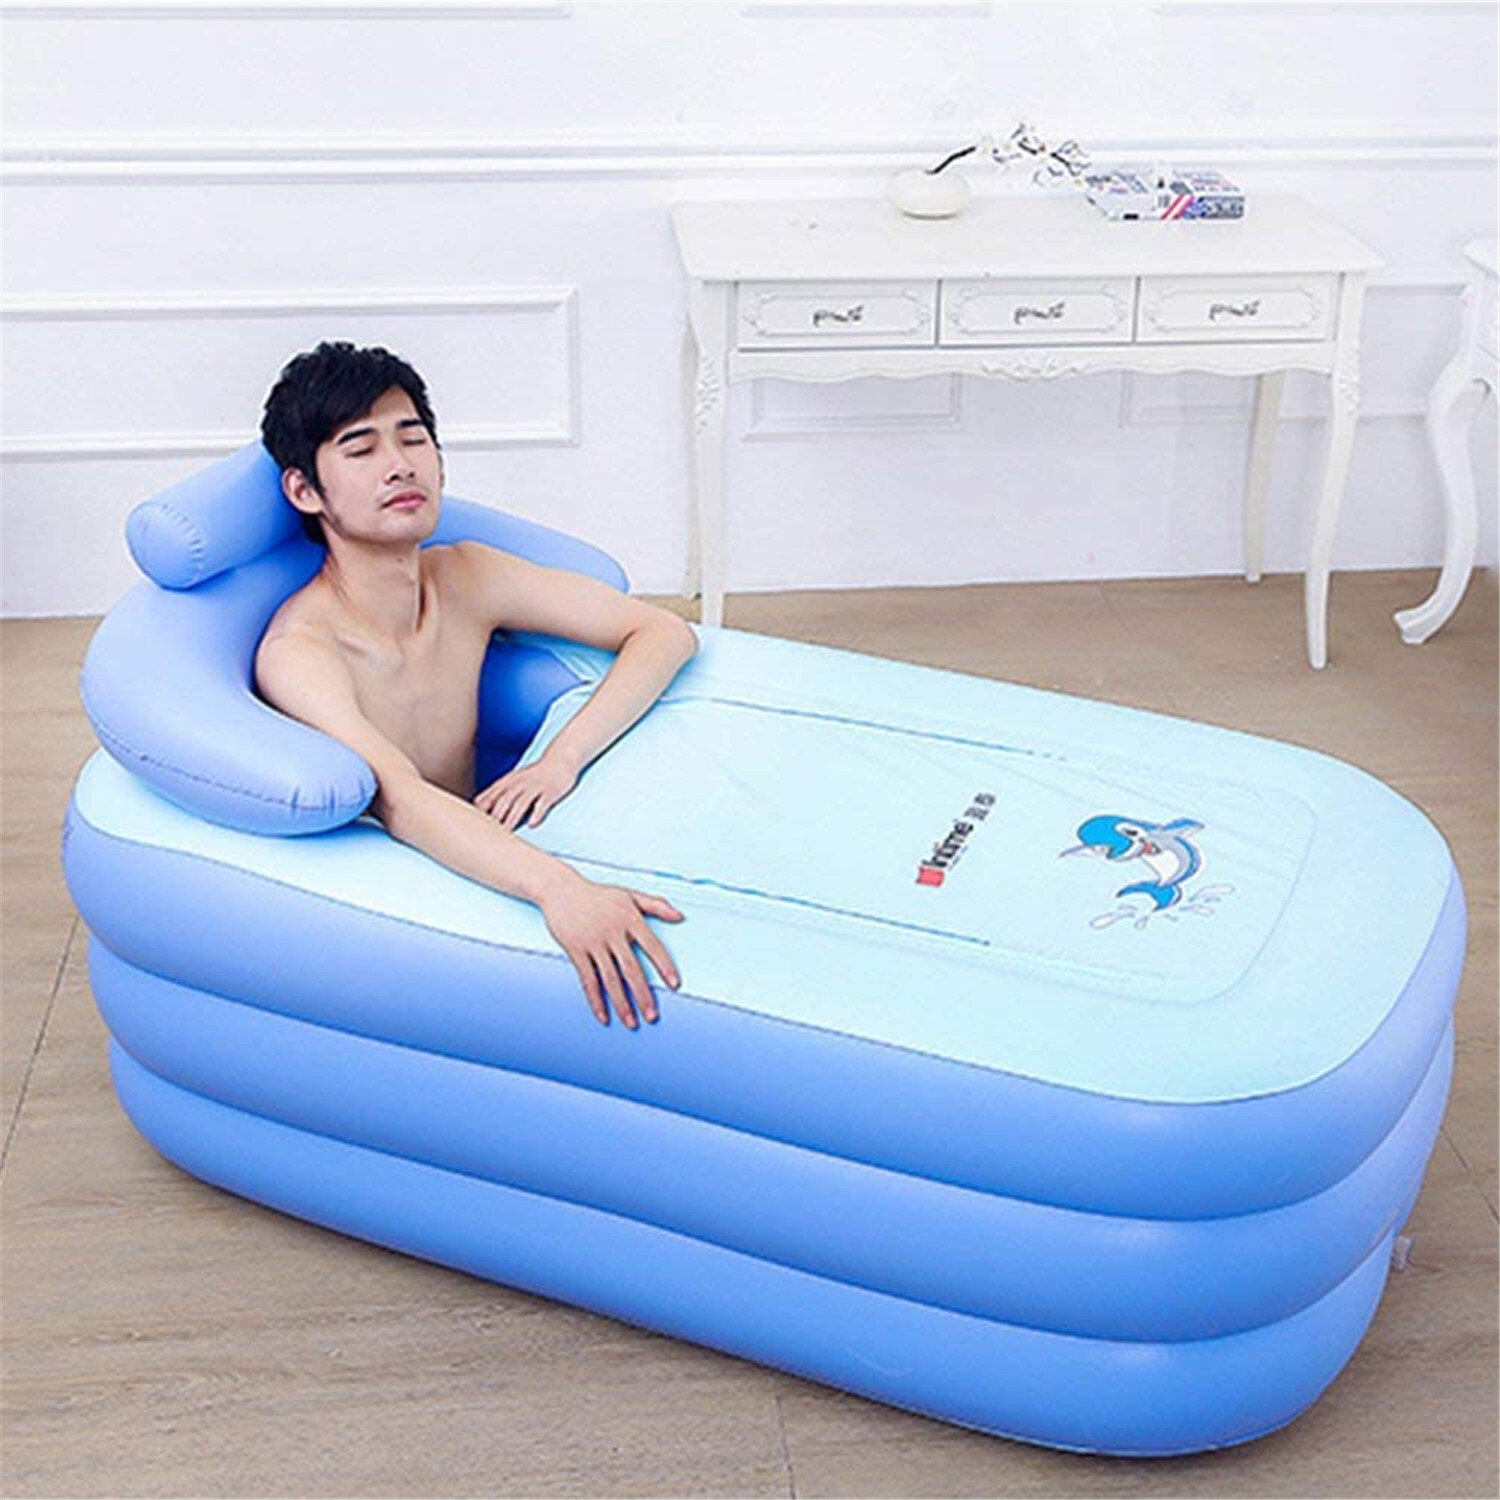 Umi Inflatable Portable Bathtub White Durable Soaking Bath Tub with Large Backrest Freestanding Inflatable Pool Bathroom Home Spa Brand